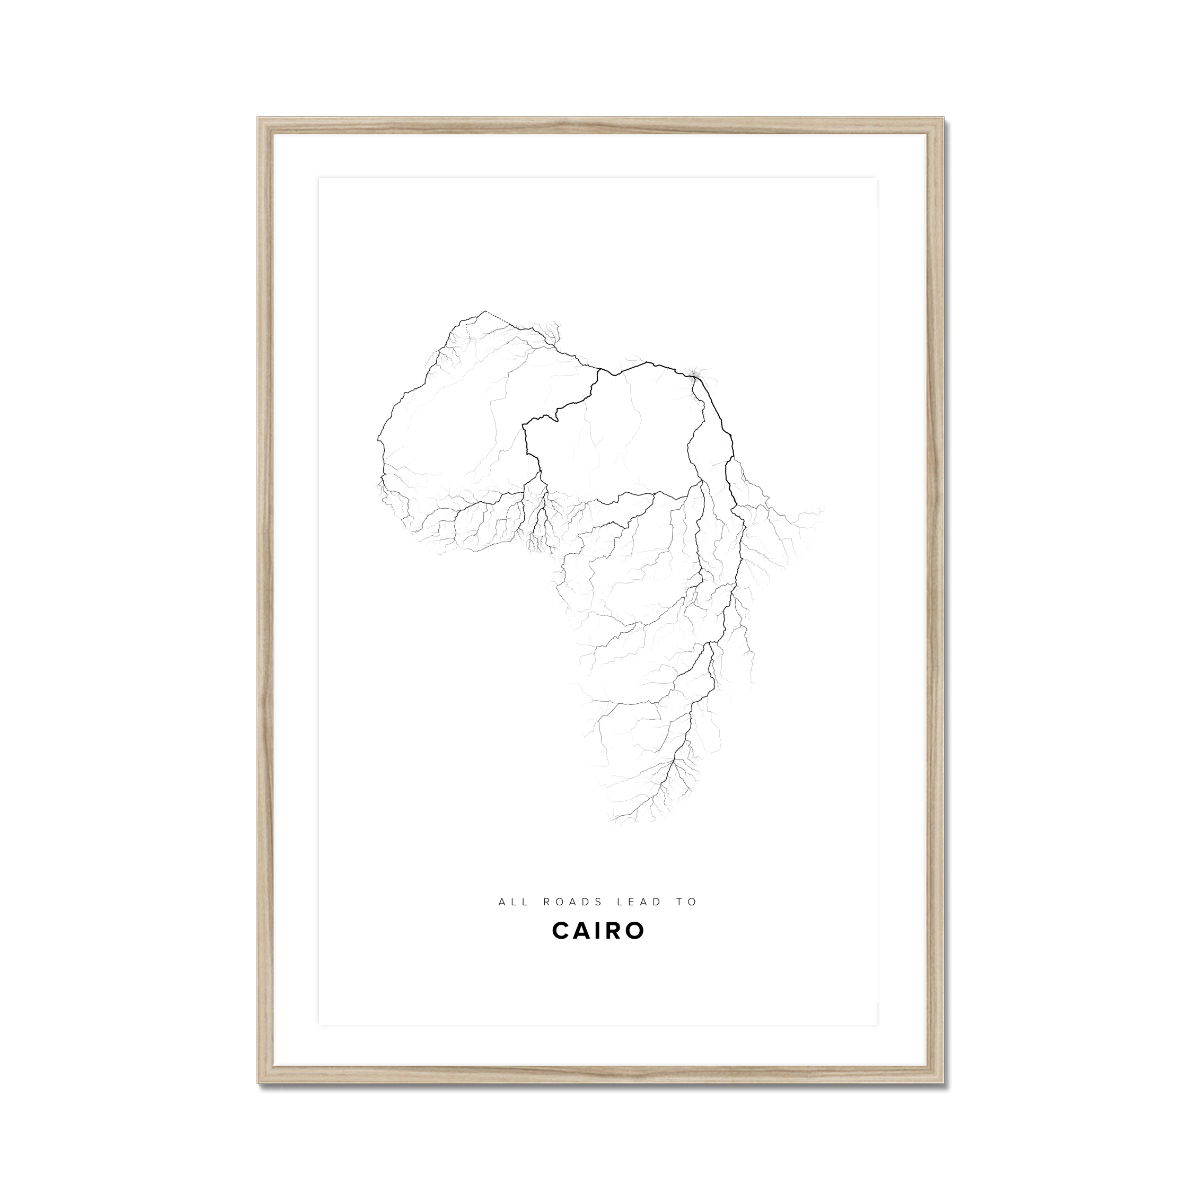 All roads lead to Cairo (Egypt) Fine Art Map Print